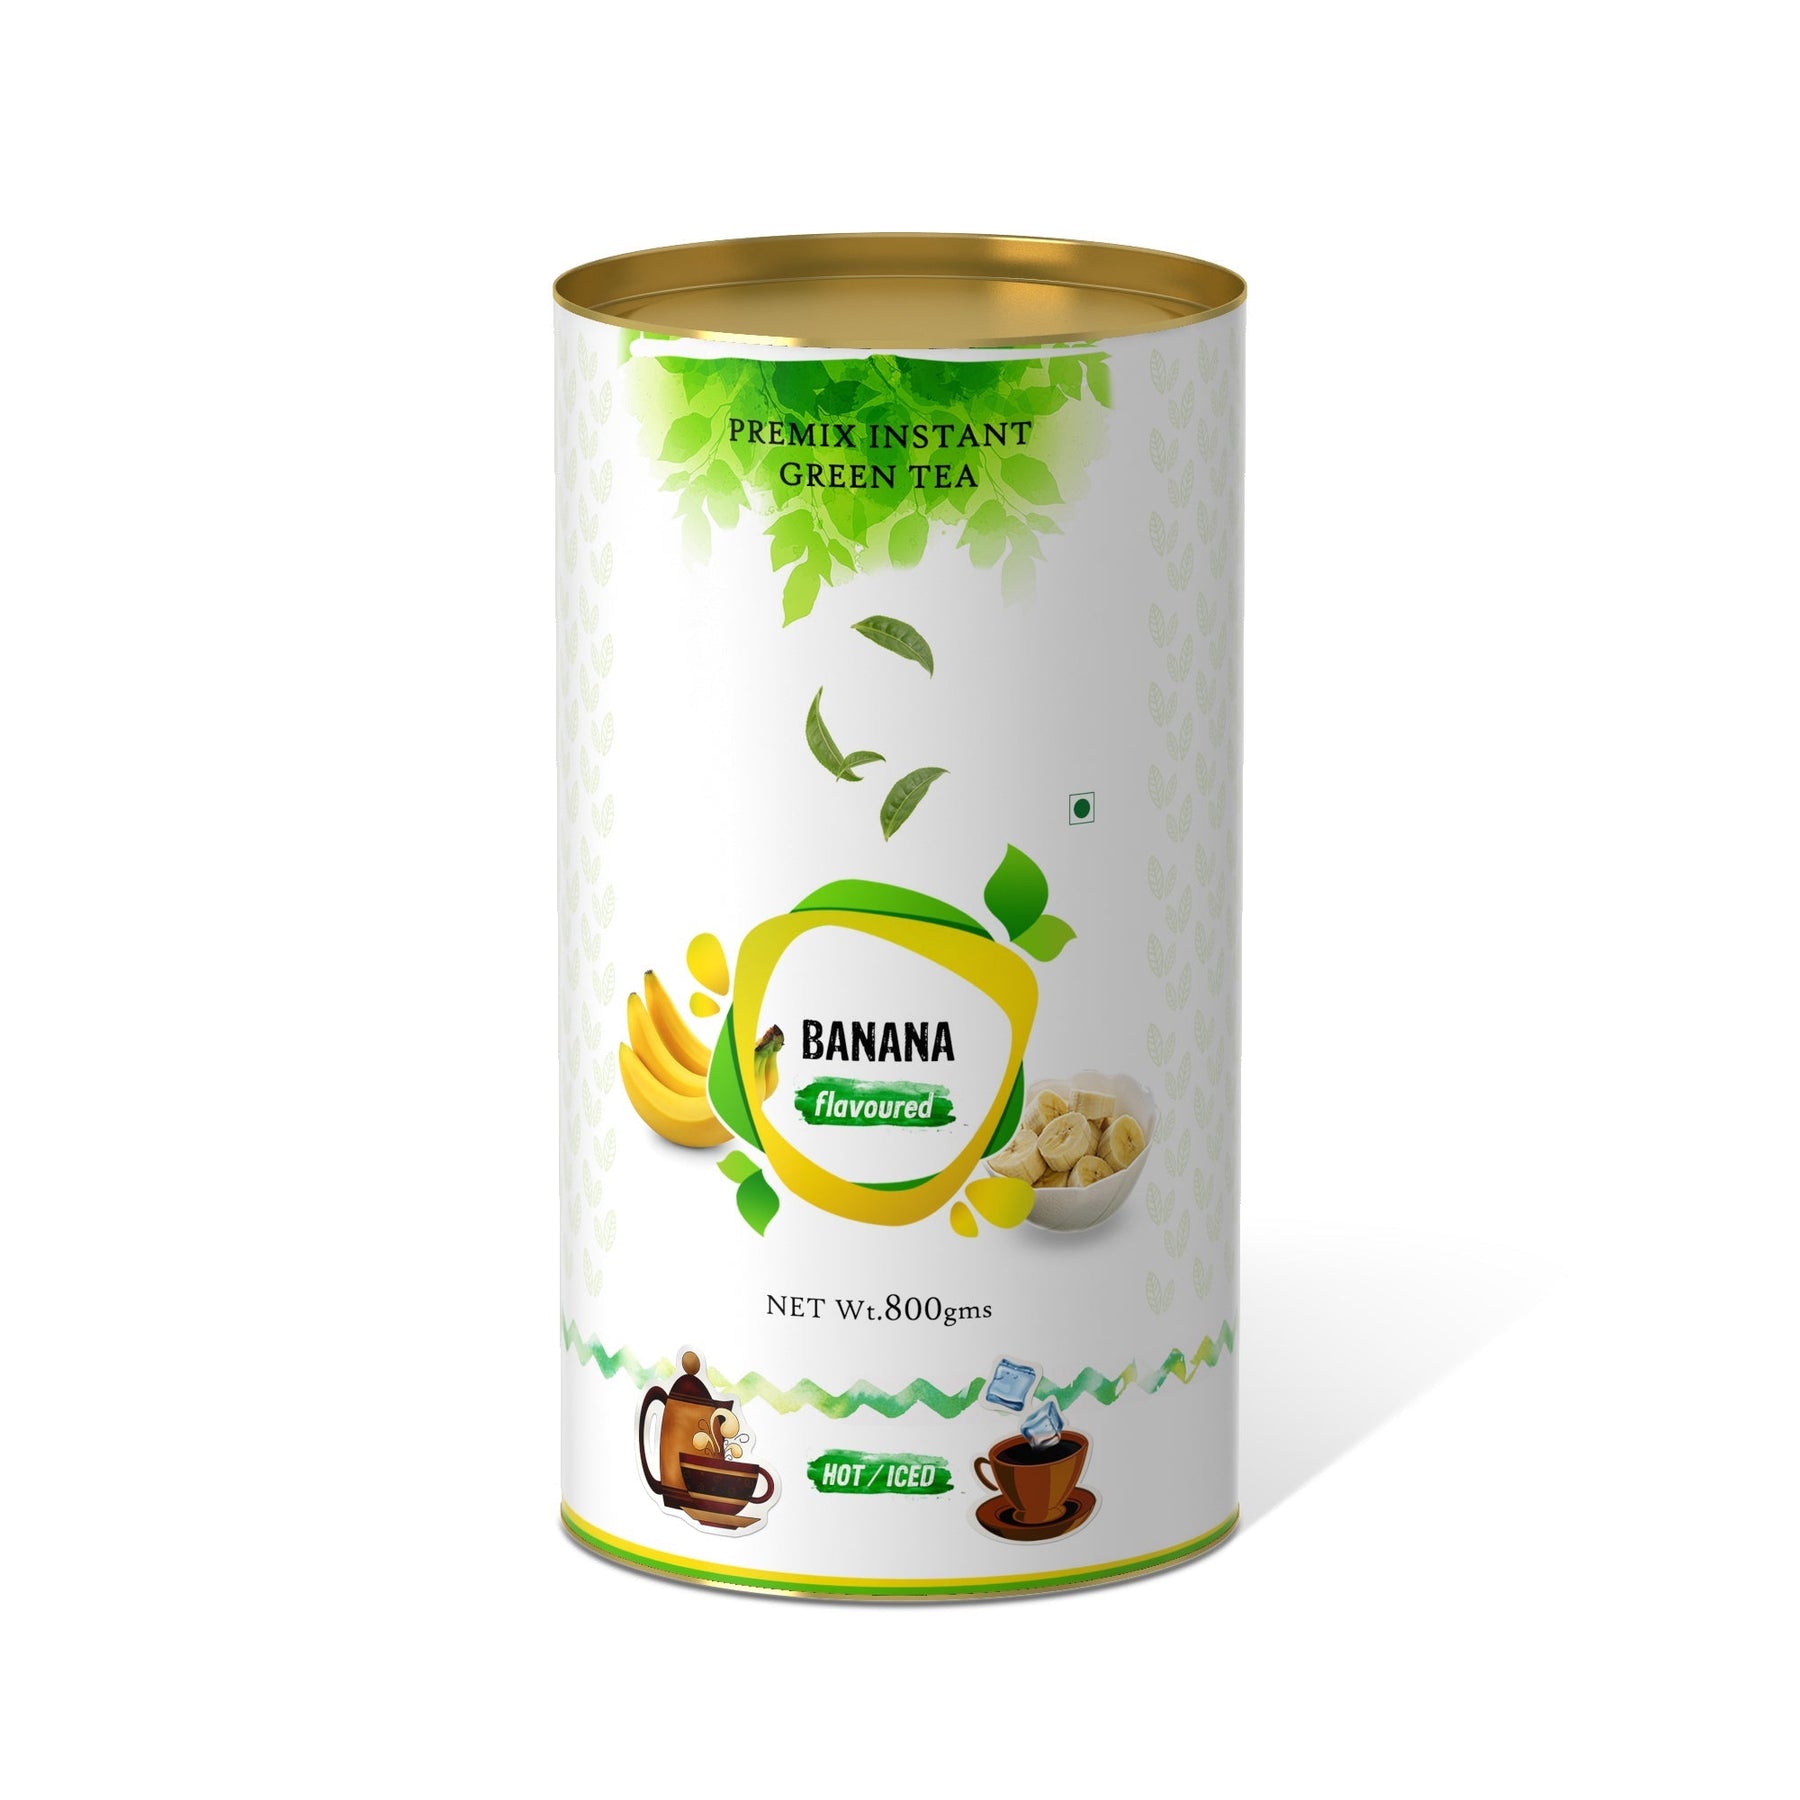 Banana Flavored Instant Green Tea - 800 gms